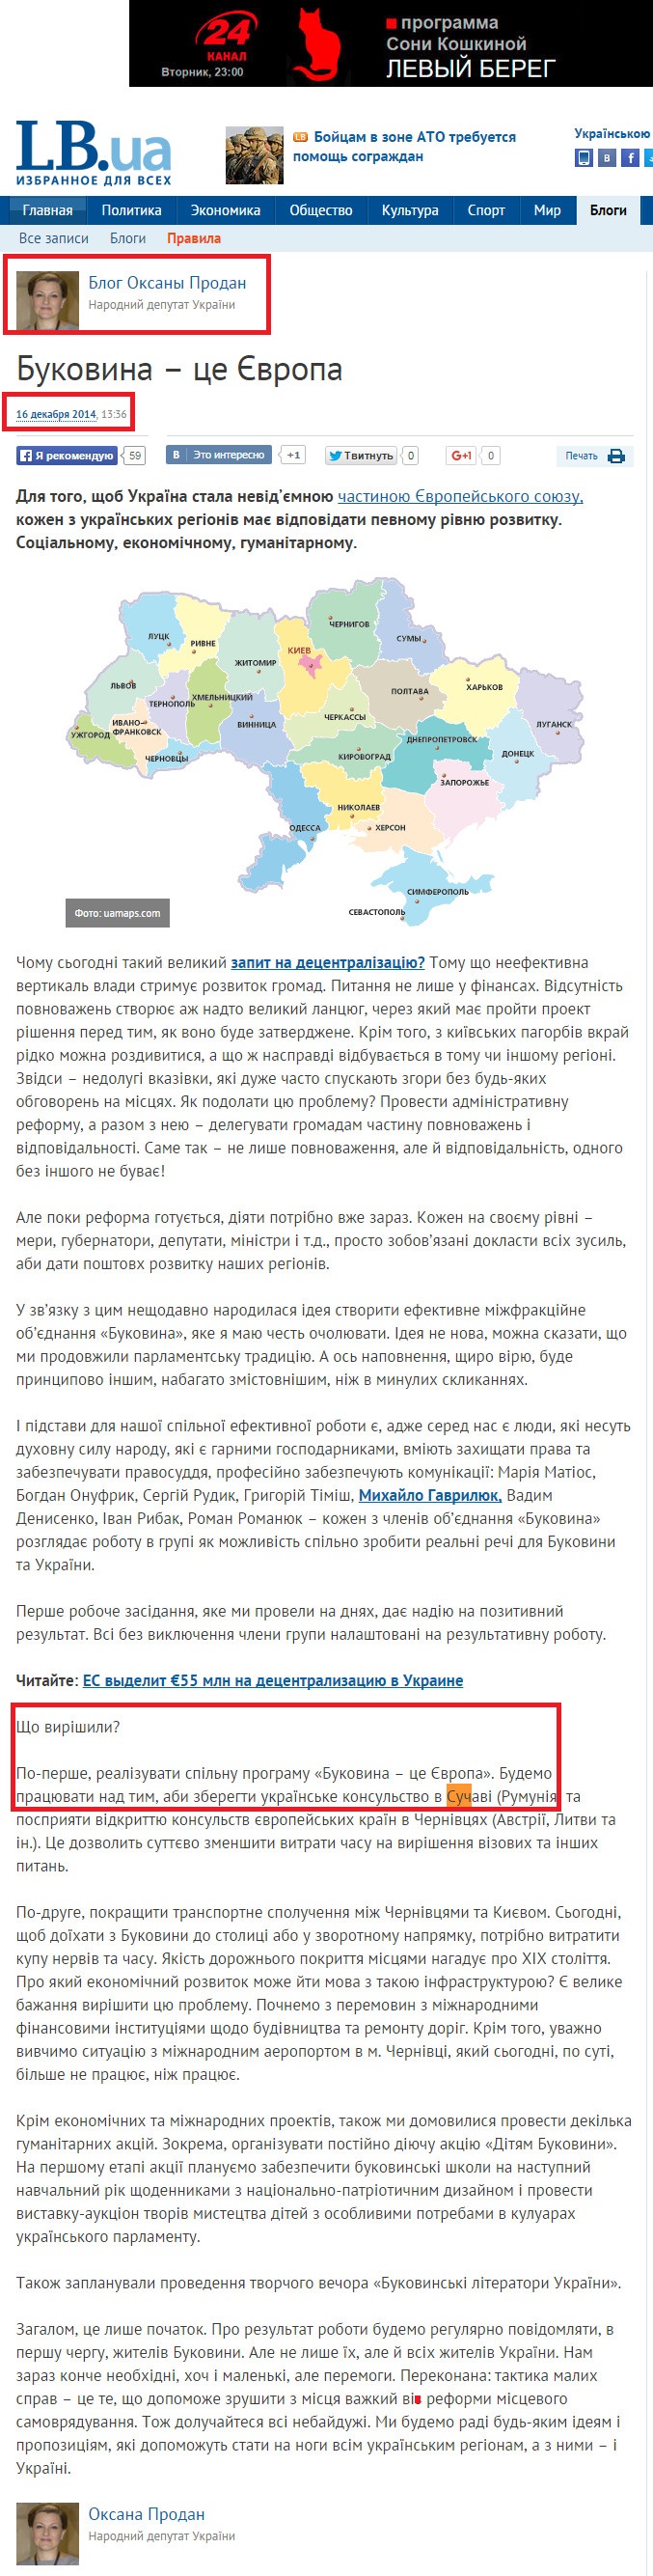 http://blogs.lb.ua/oksana_prodan/289476_bukovina-tse_ievropa.html